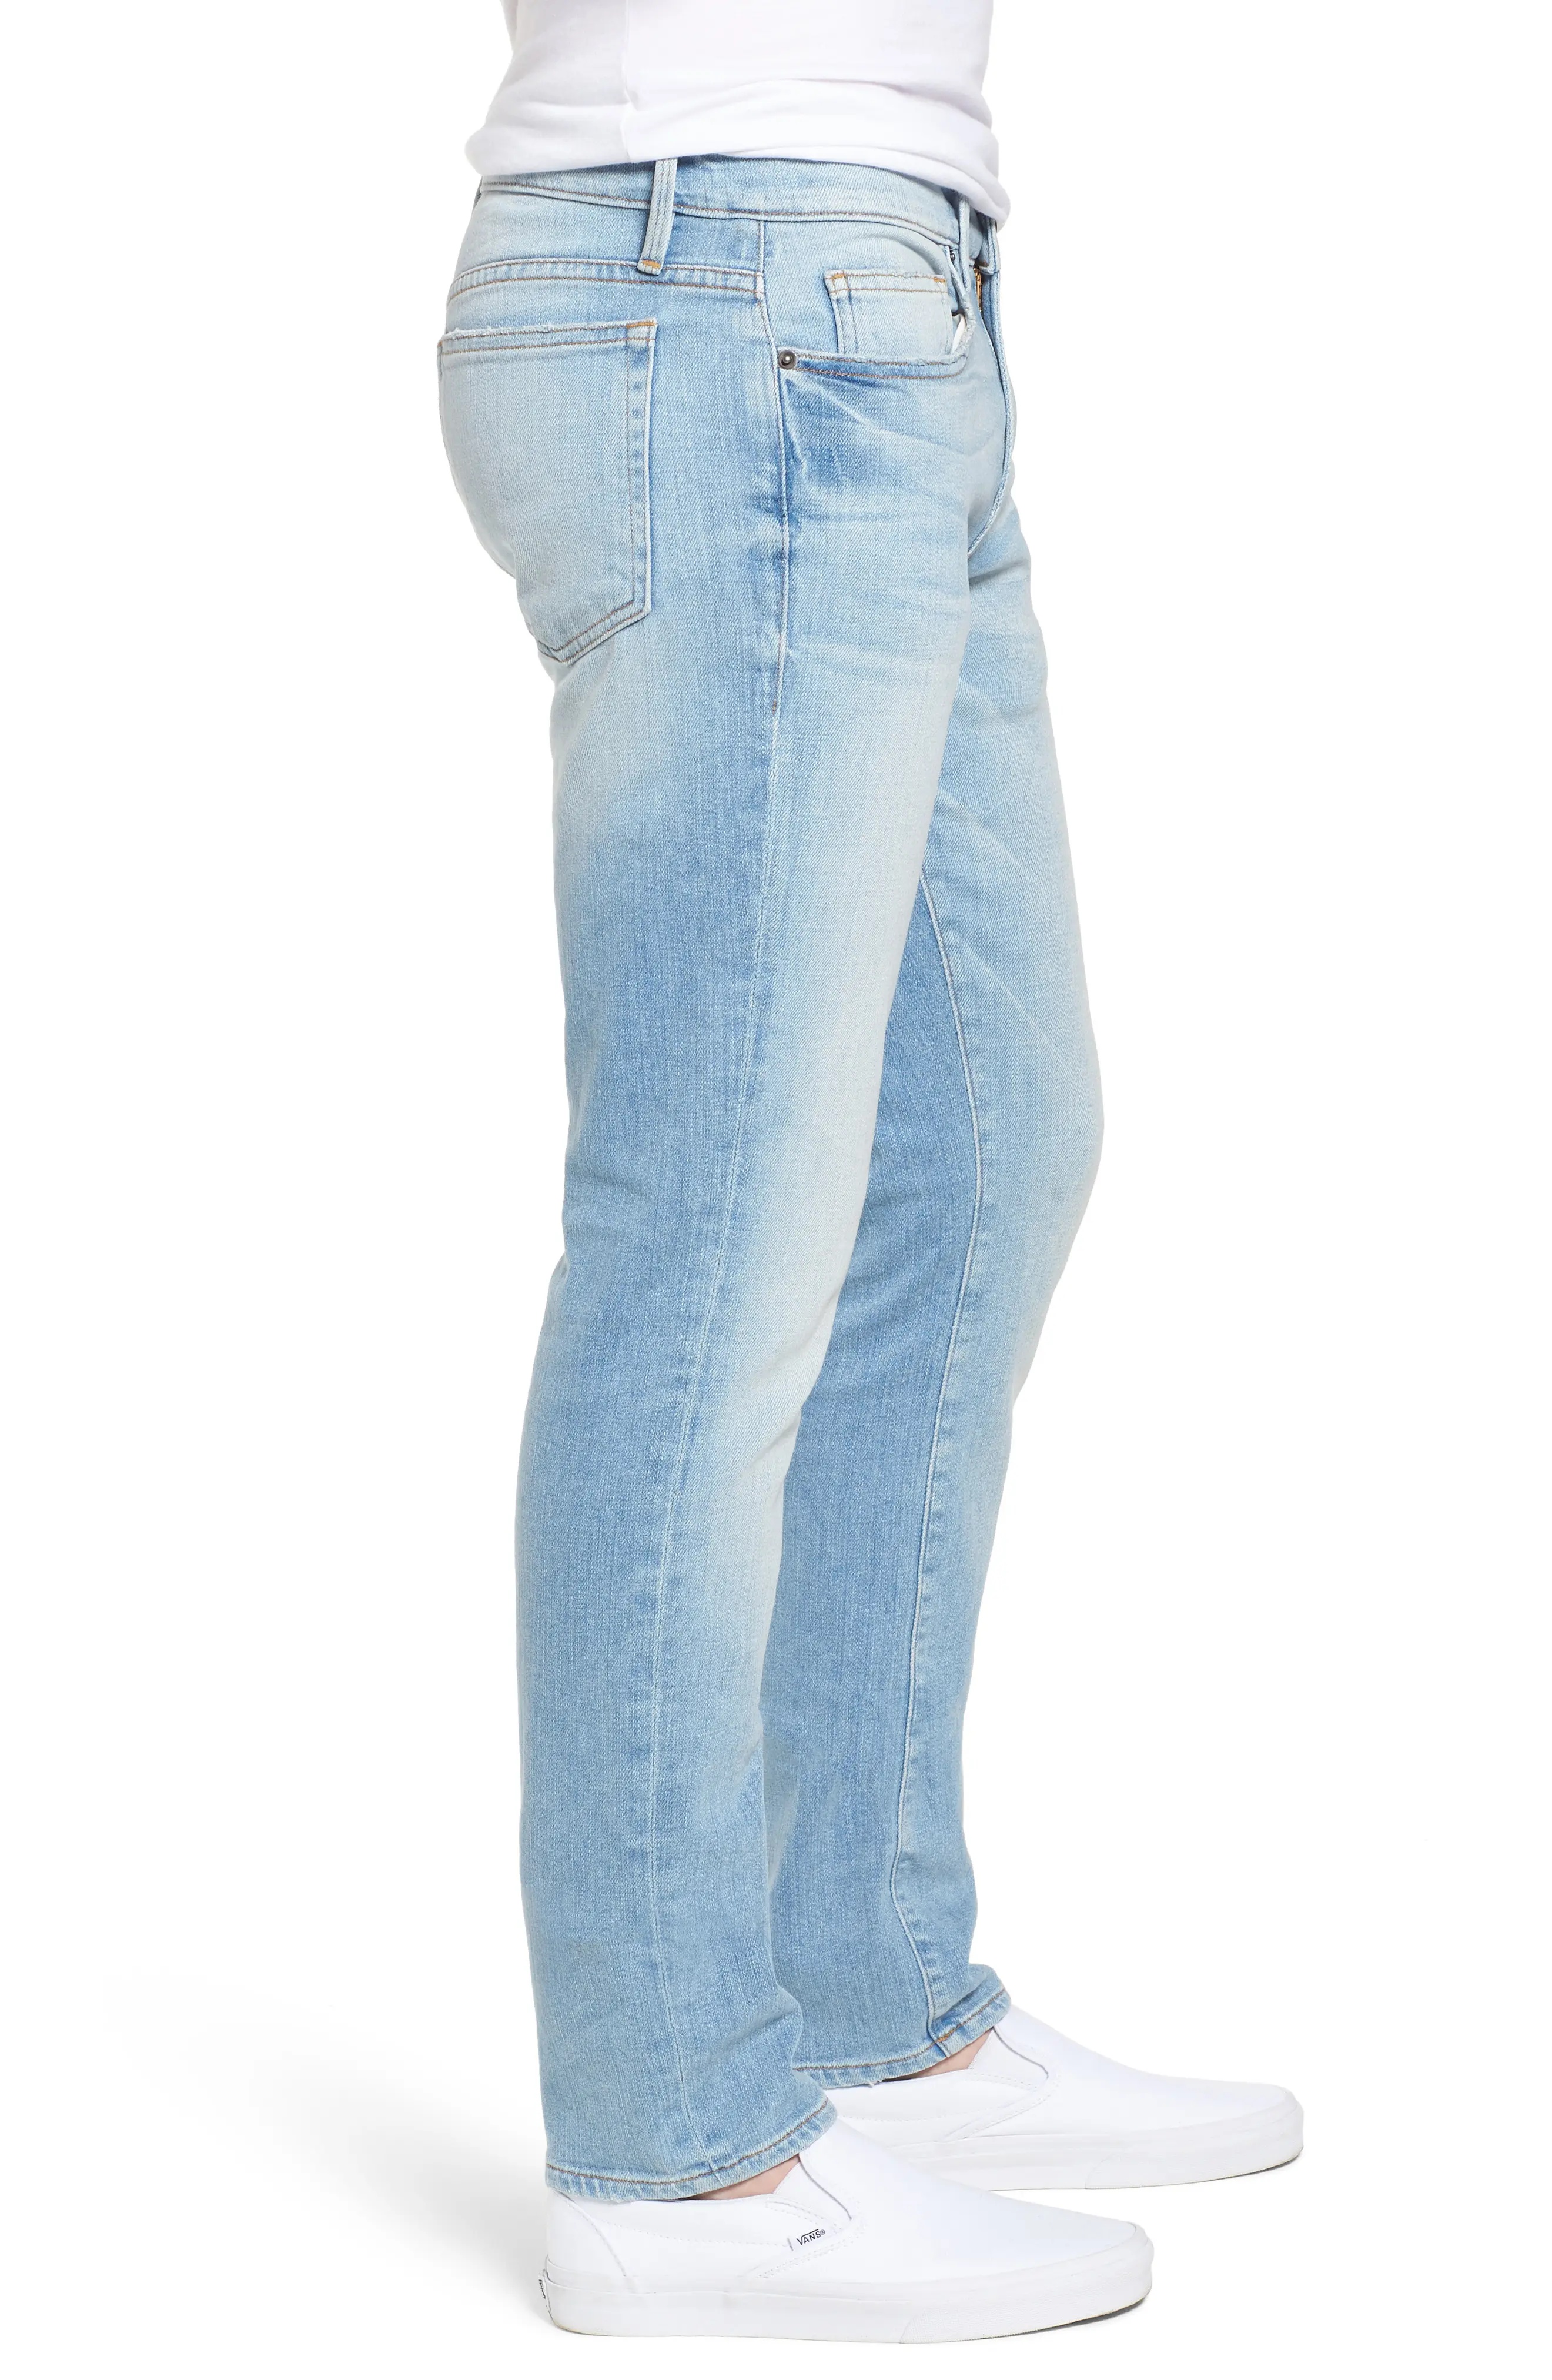 L'Homme Slim Fit Jeans - 4